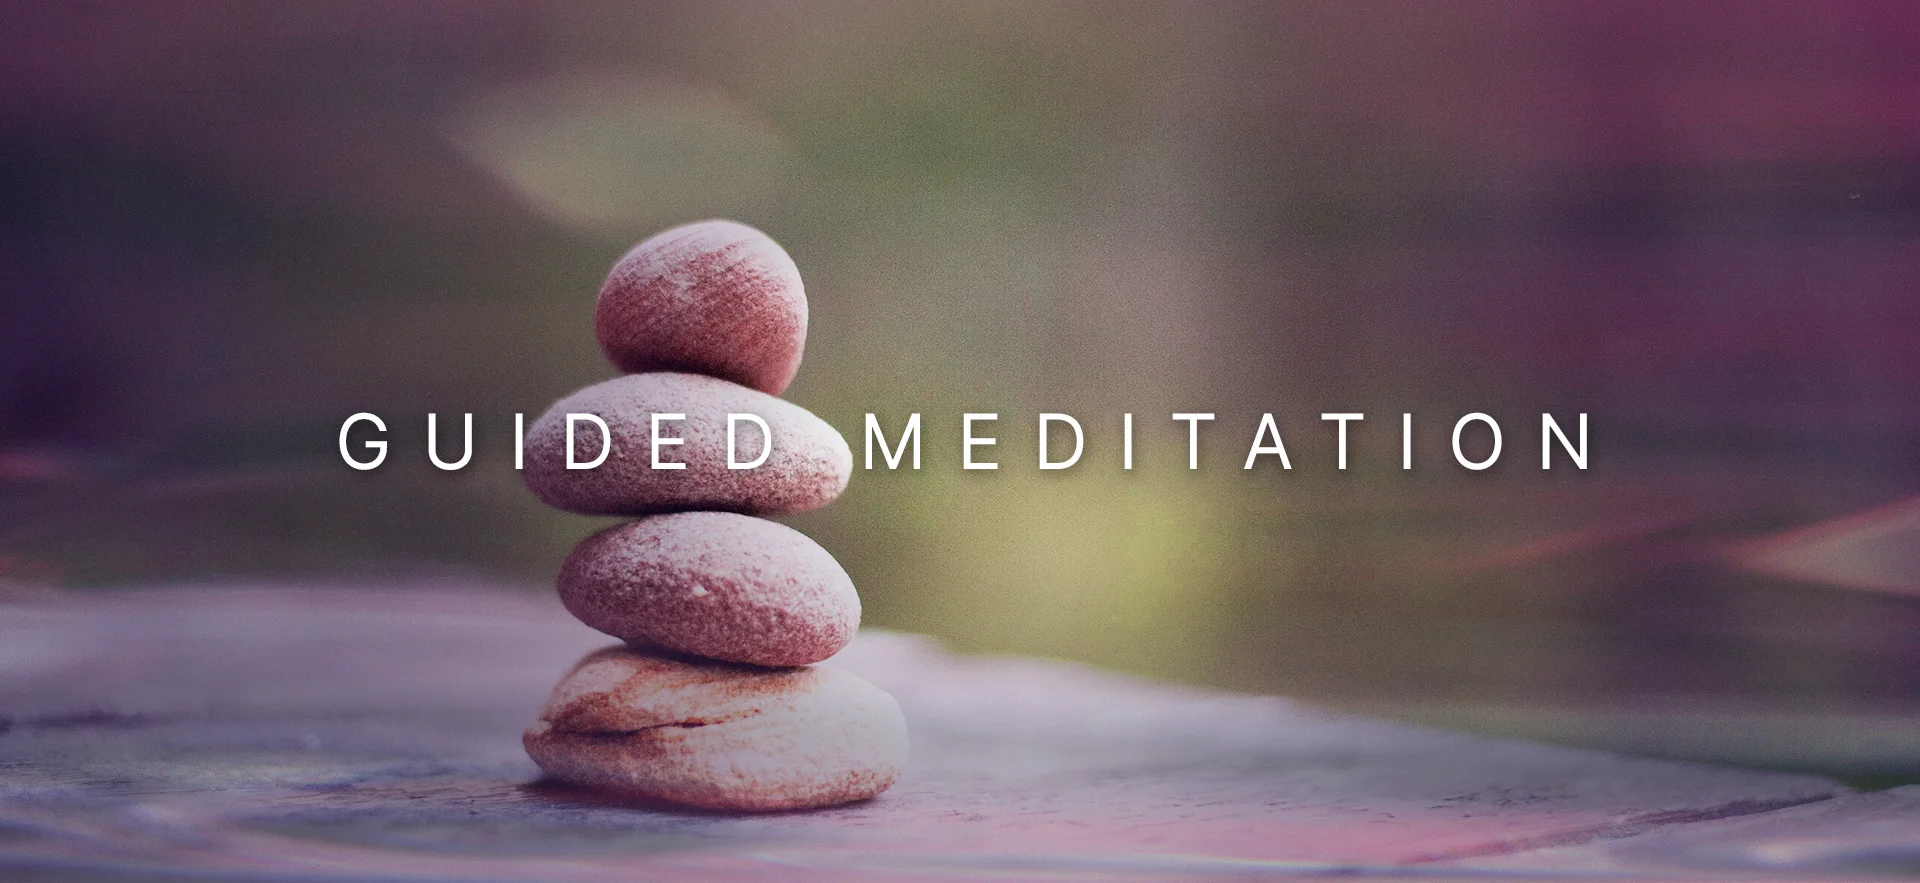 Free guided meditation mp3